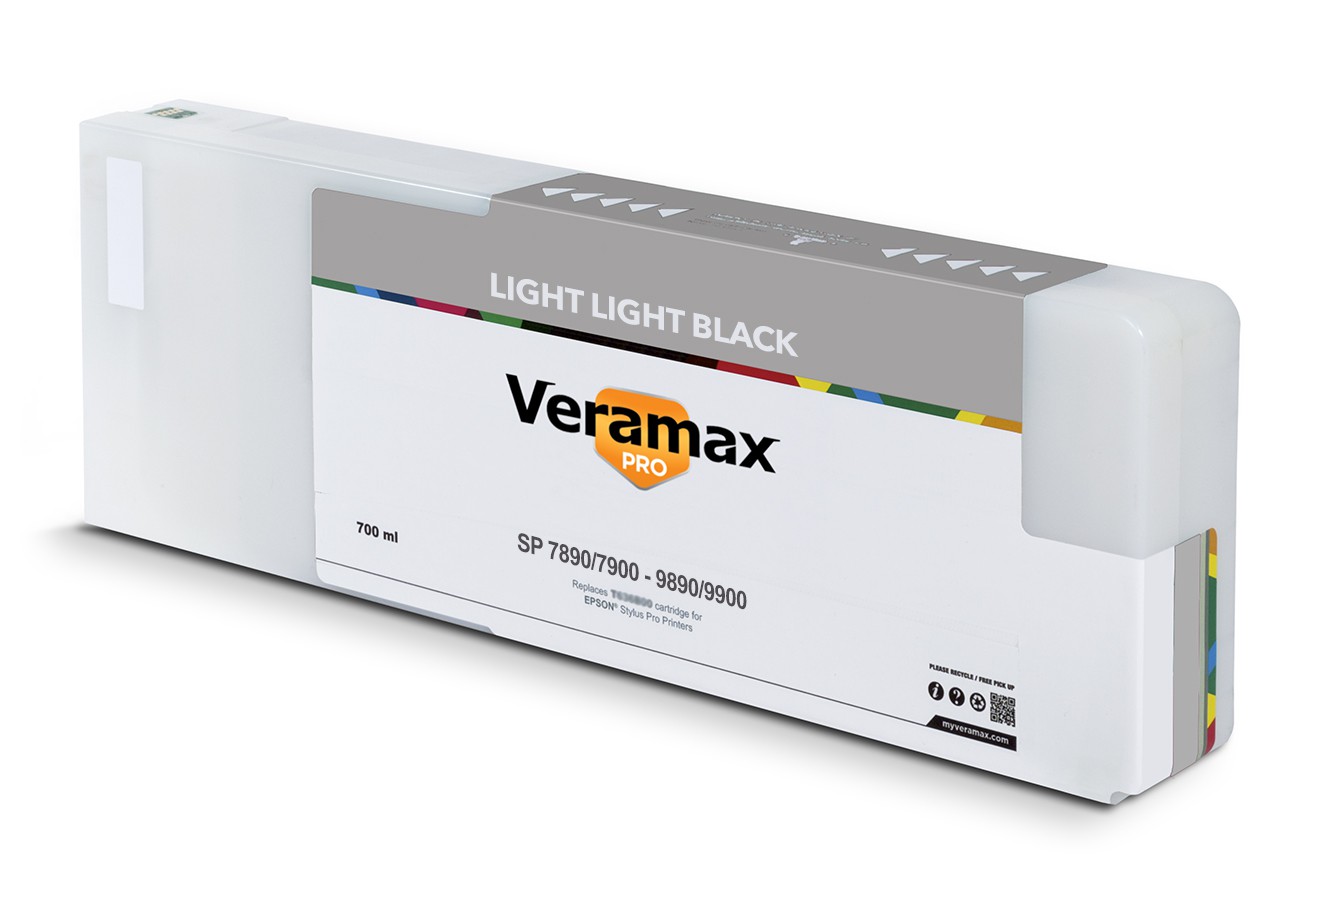 Veramax PRO SP 7890/9890 7900/9900 700ml Light Light Black